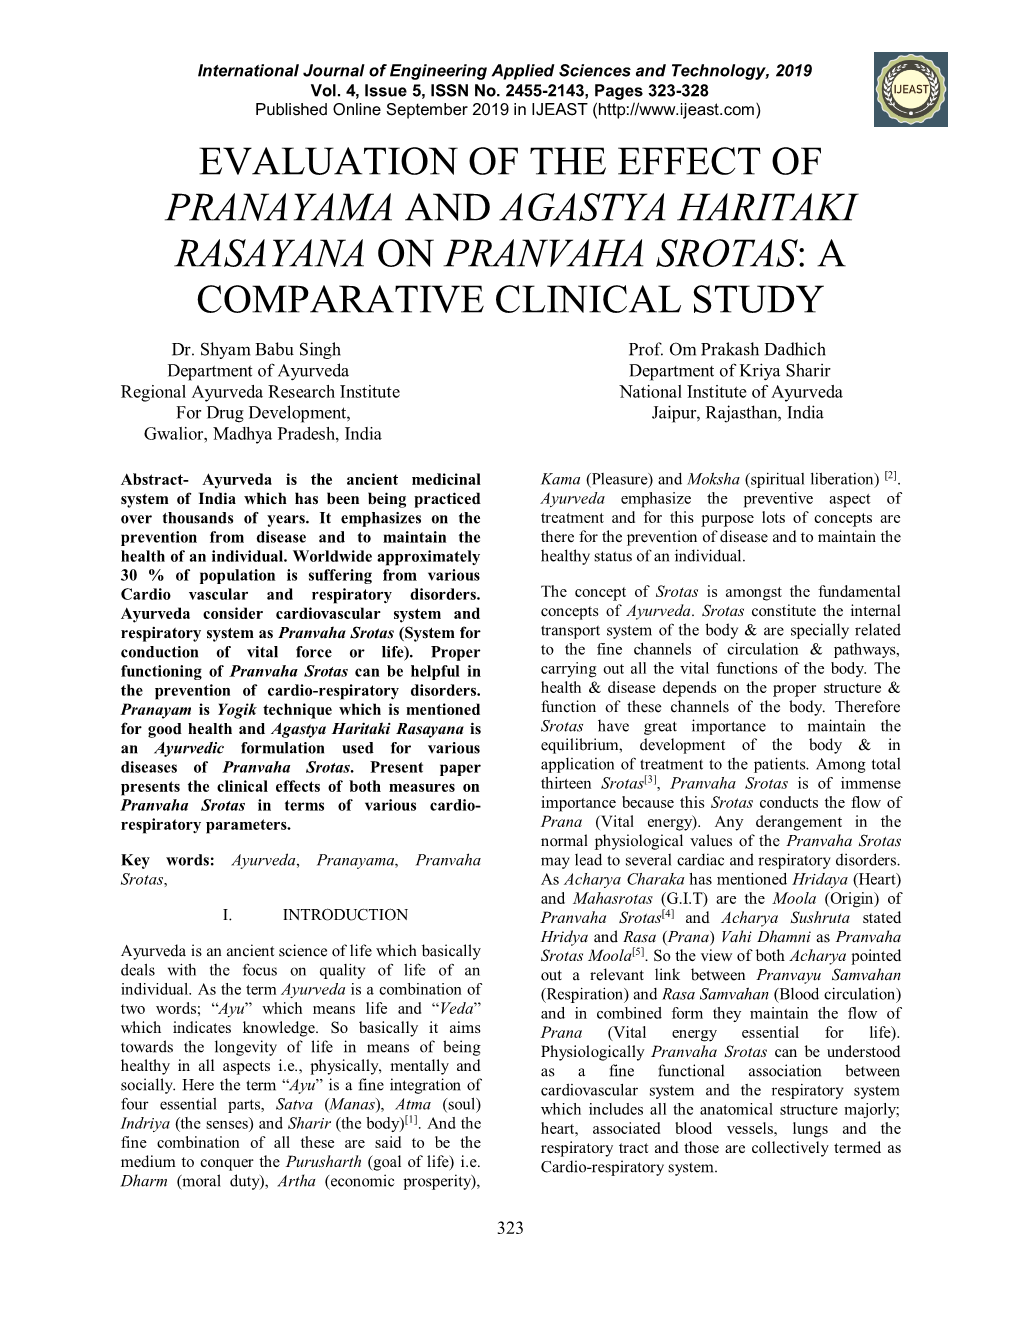 Evaluation of the Effect of Pranayama and Agastya Haritaki Rasayana on Pranvaha Srotas: a Comparative Clinical Study